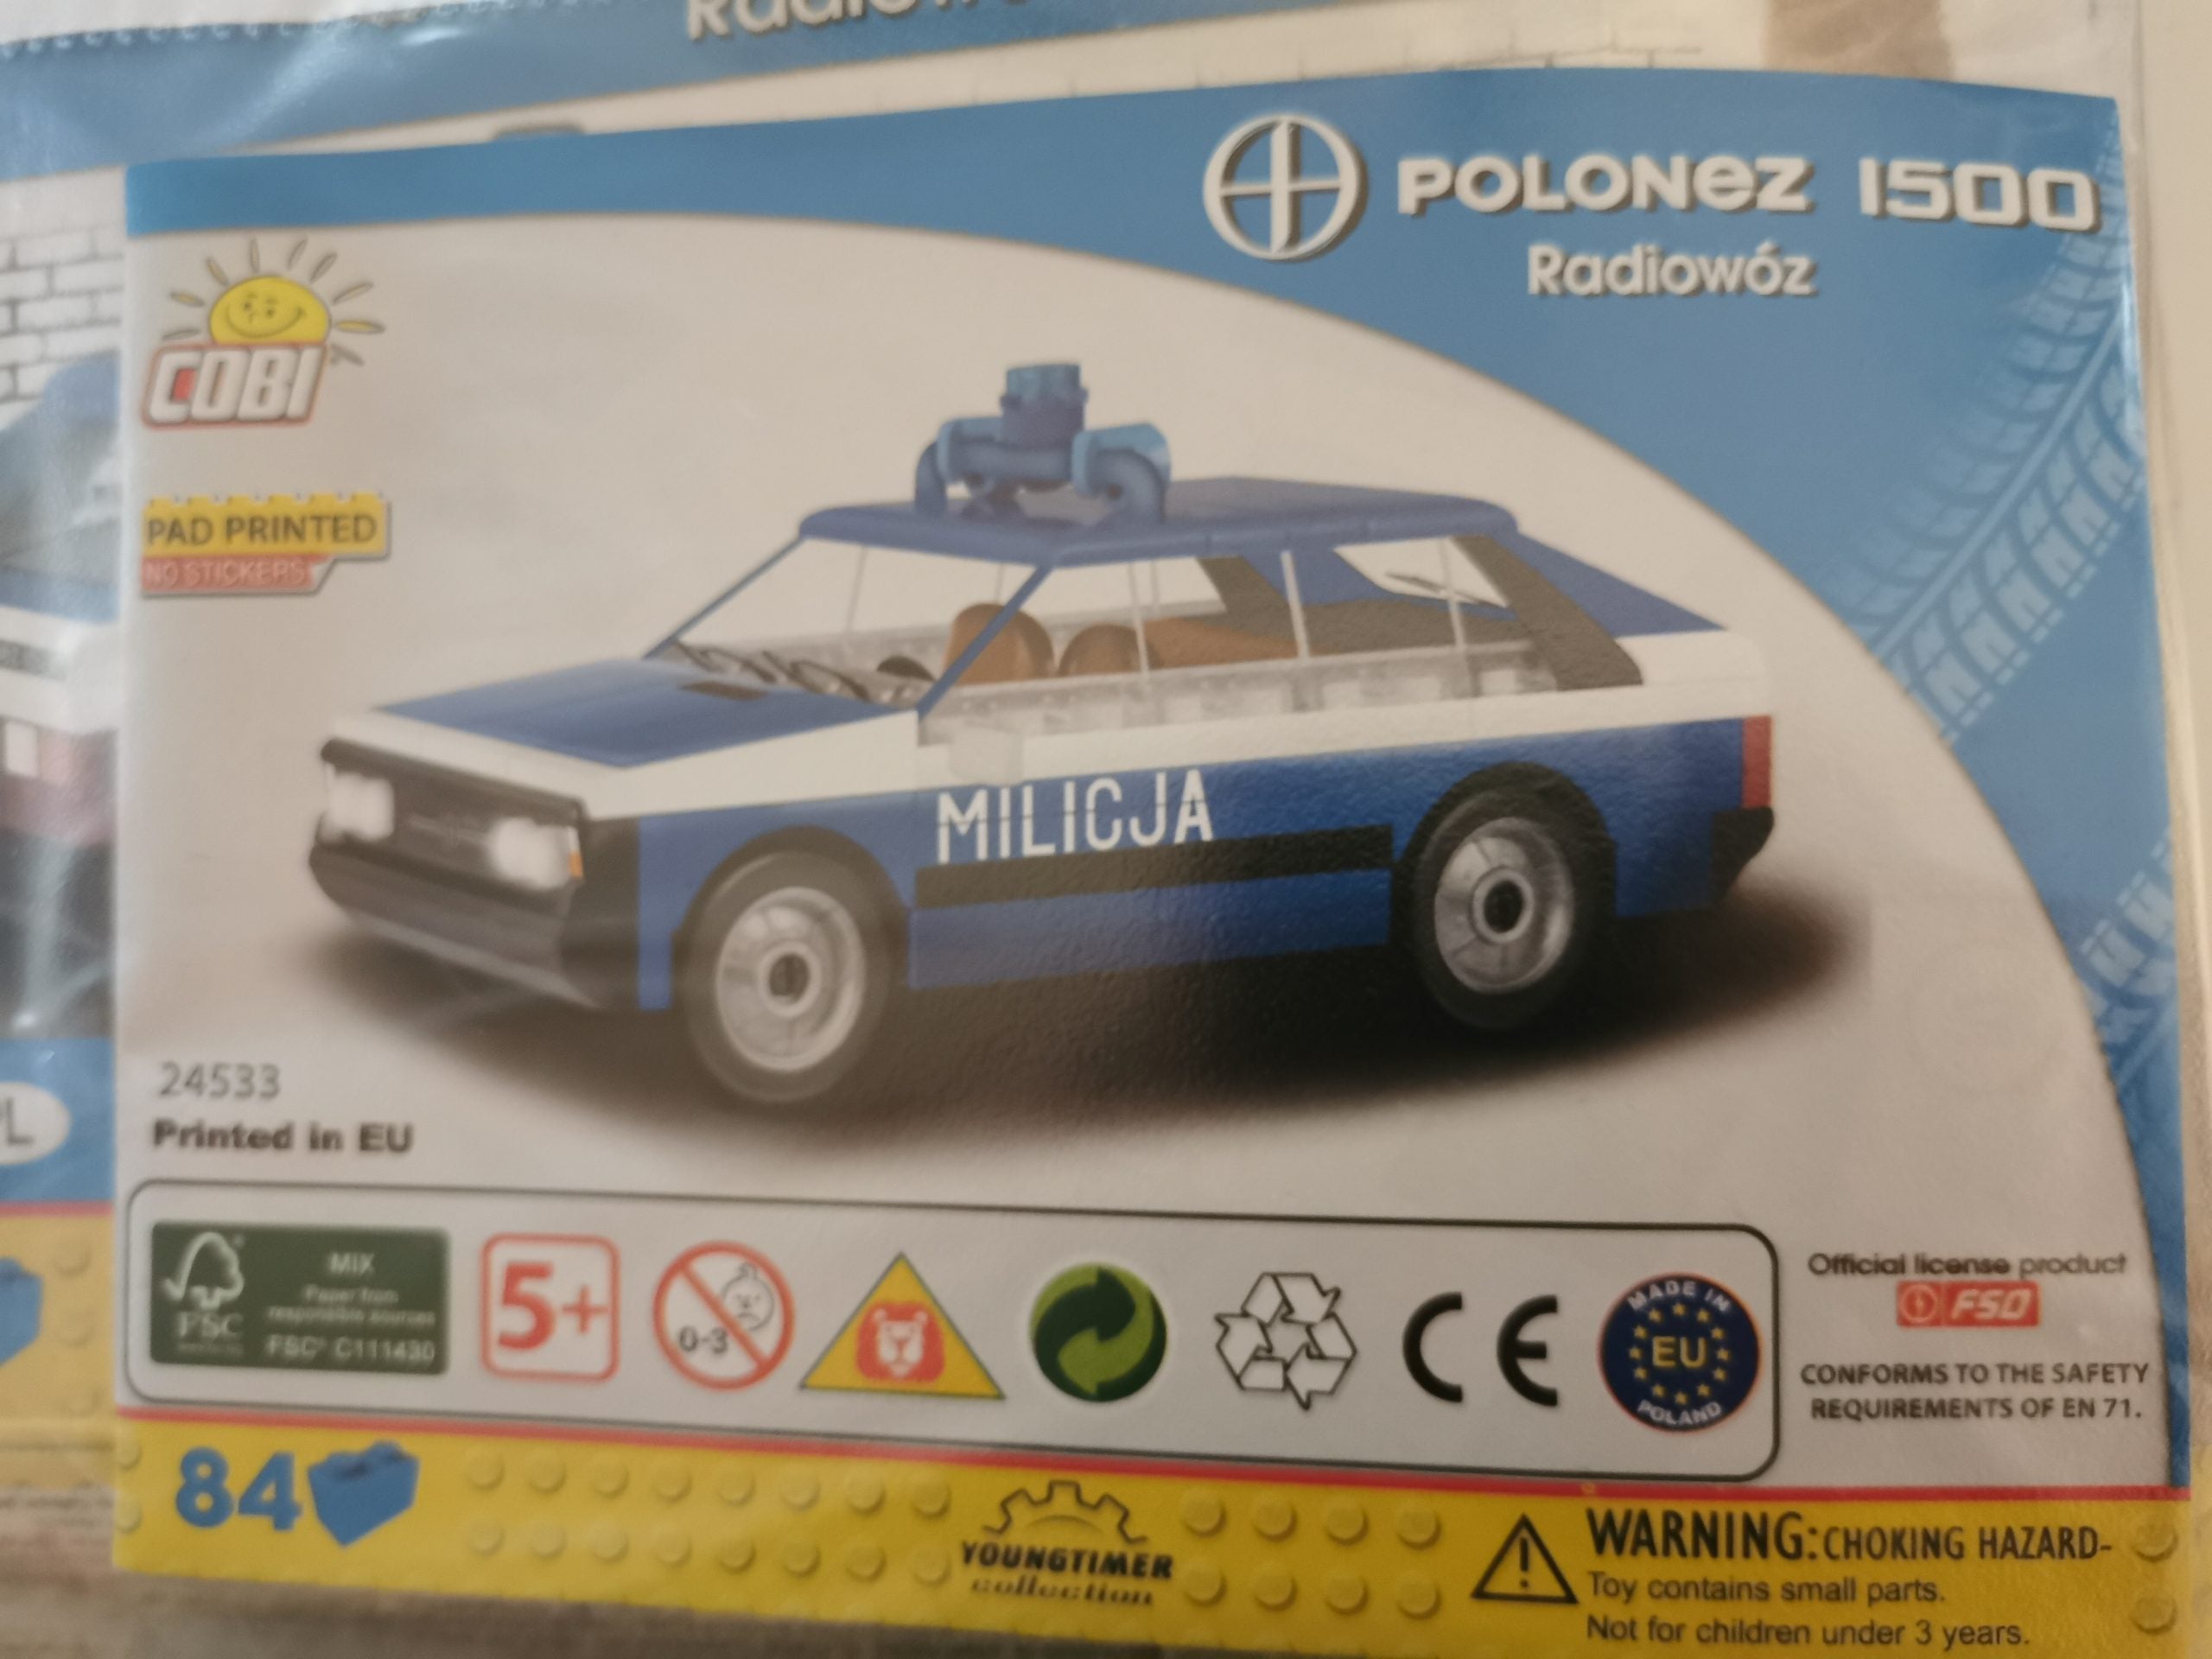 Cobi 24533 Polonez 1500 Radiowoz used